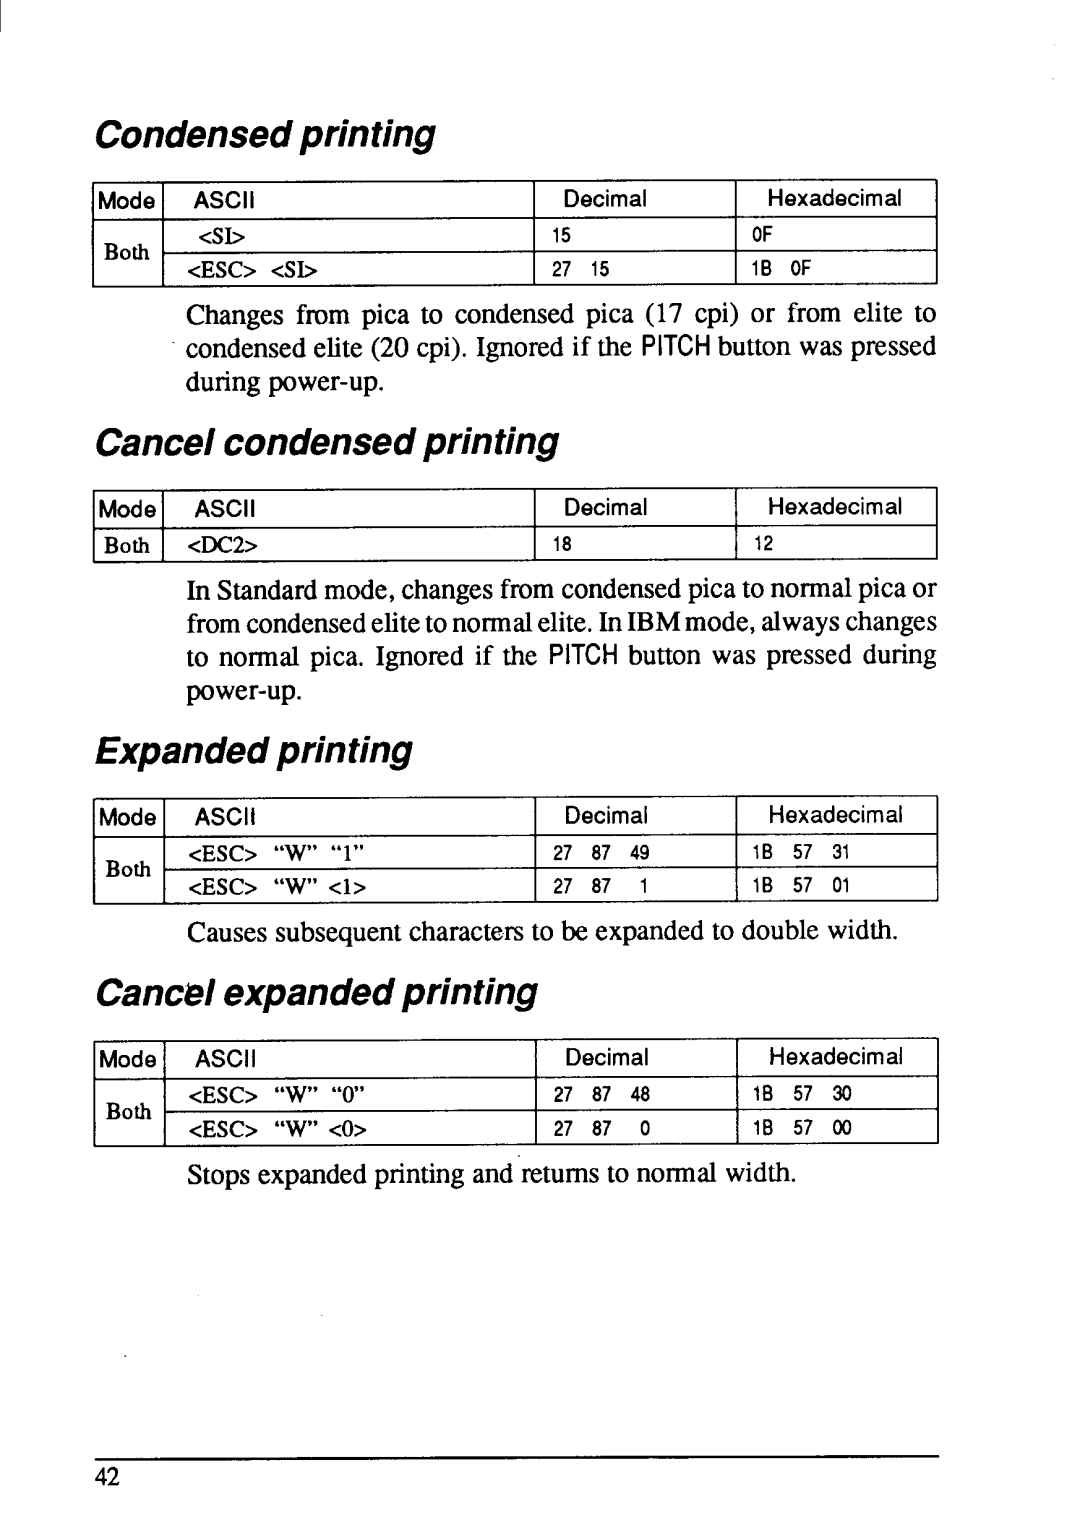 Star Micronics NX-1001 manual Both 